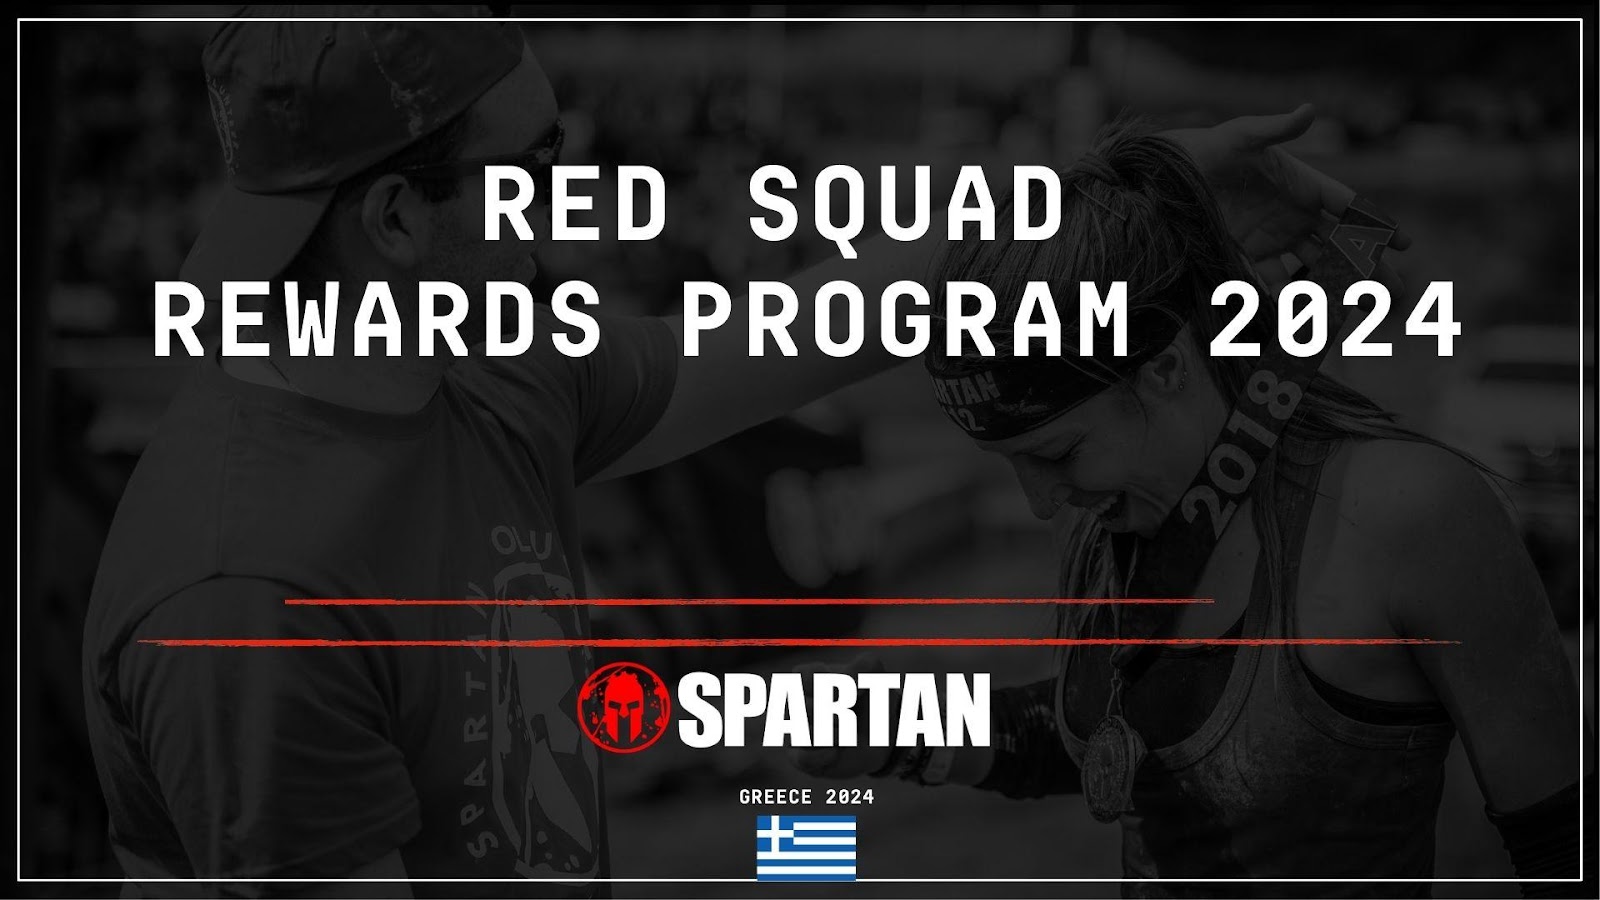 GREECE RED SQUAD REWARDS 2024.jpg